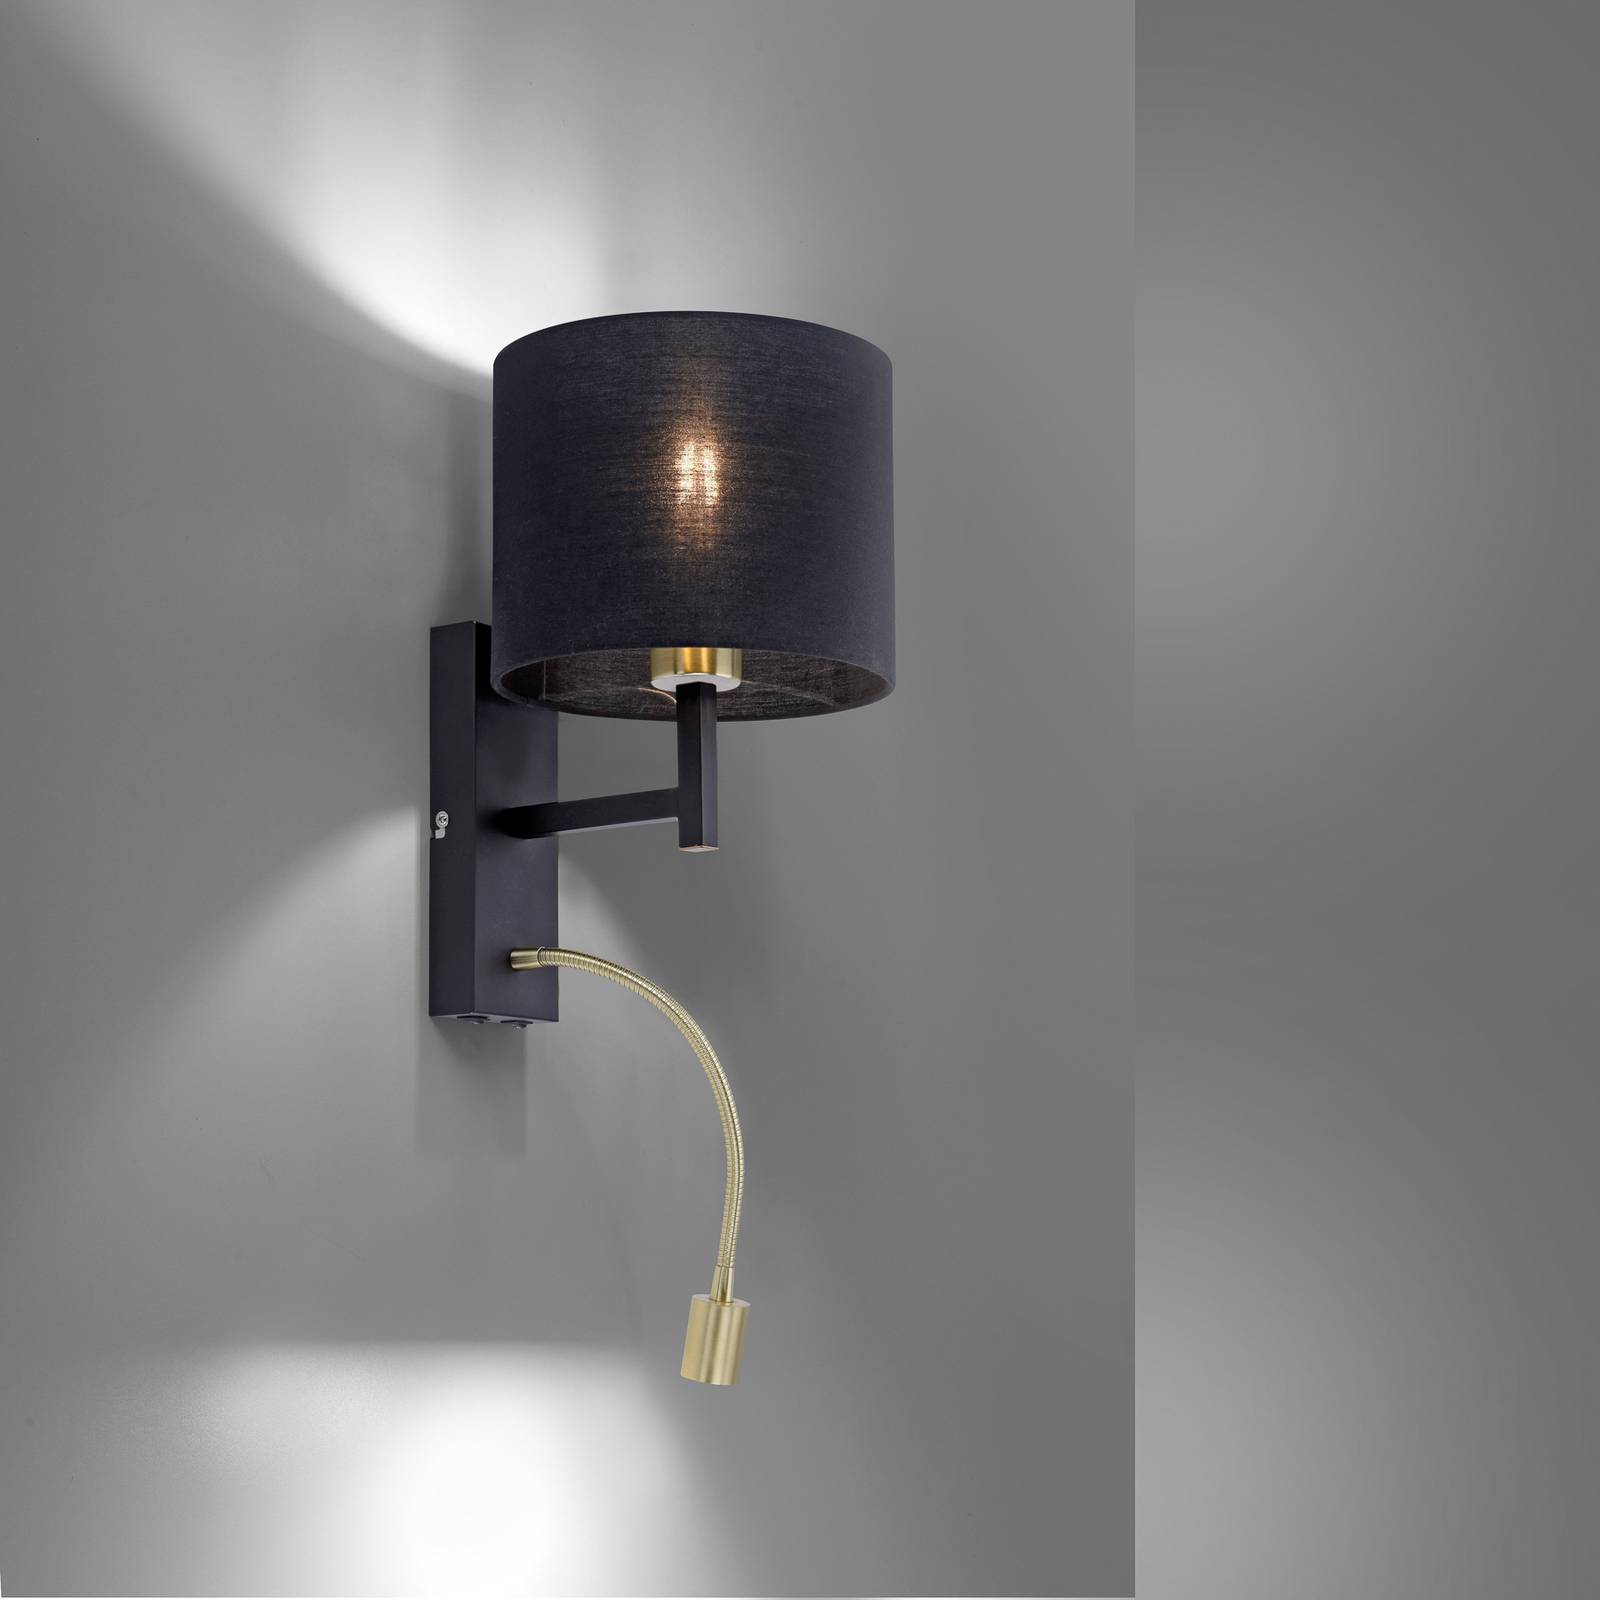 Paul Neuhaus Robin wandlamp met leesarm, zwart